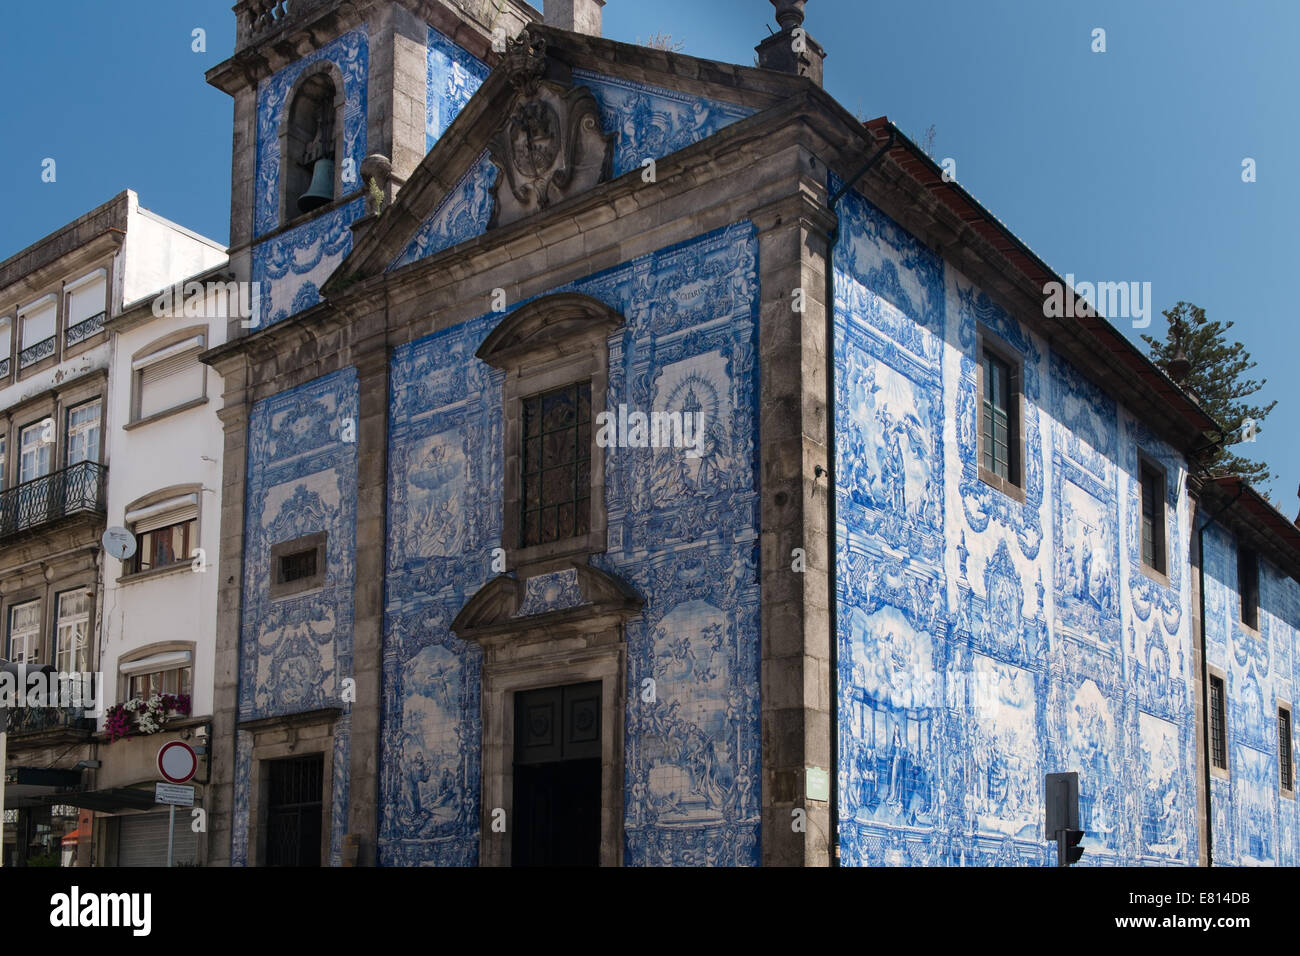 Hand painted decorative tiles, azulejos, covering the 18th century Capela das Almas, Oporto, Portugal Stock Photo